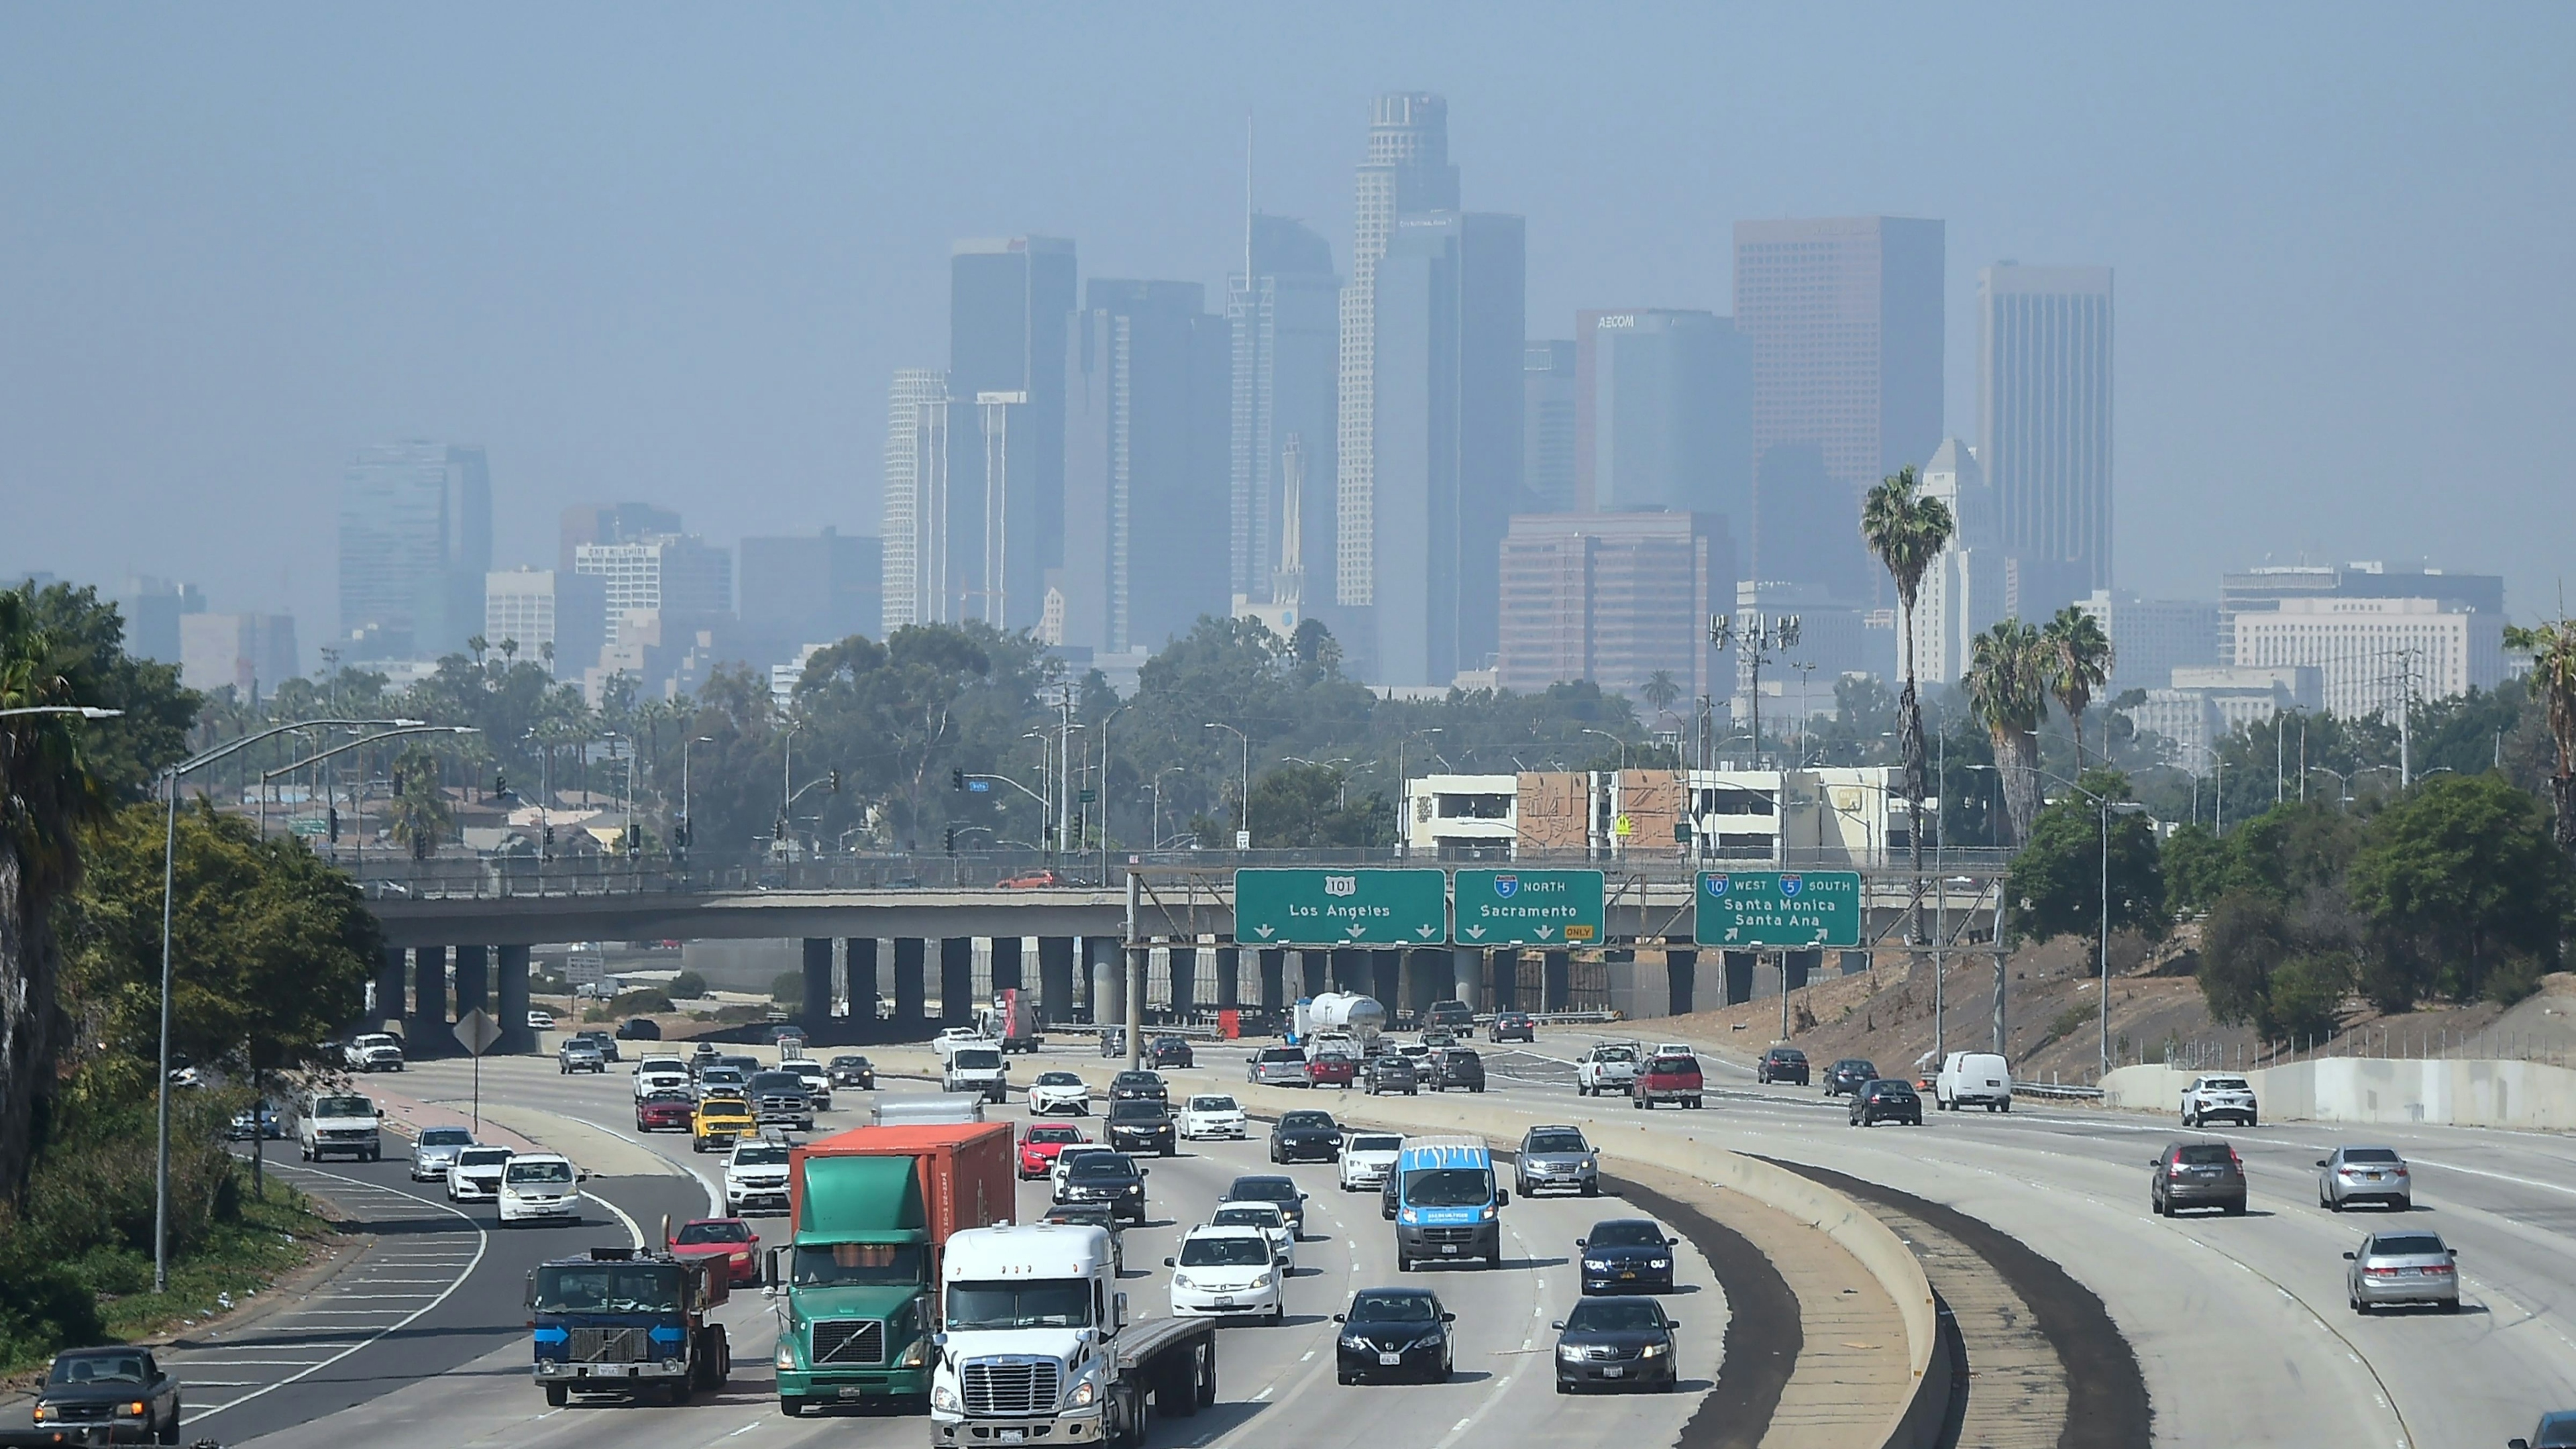 Smog in LA